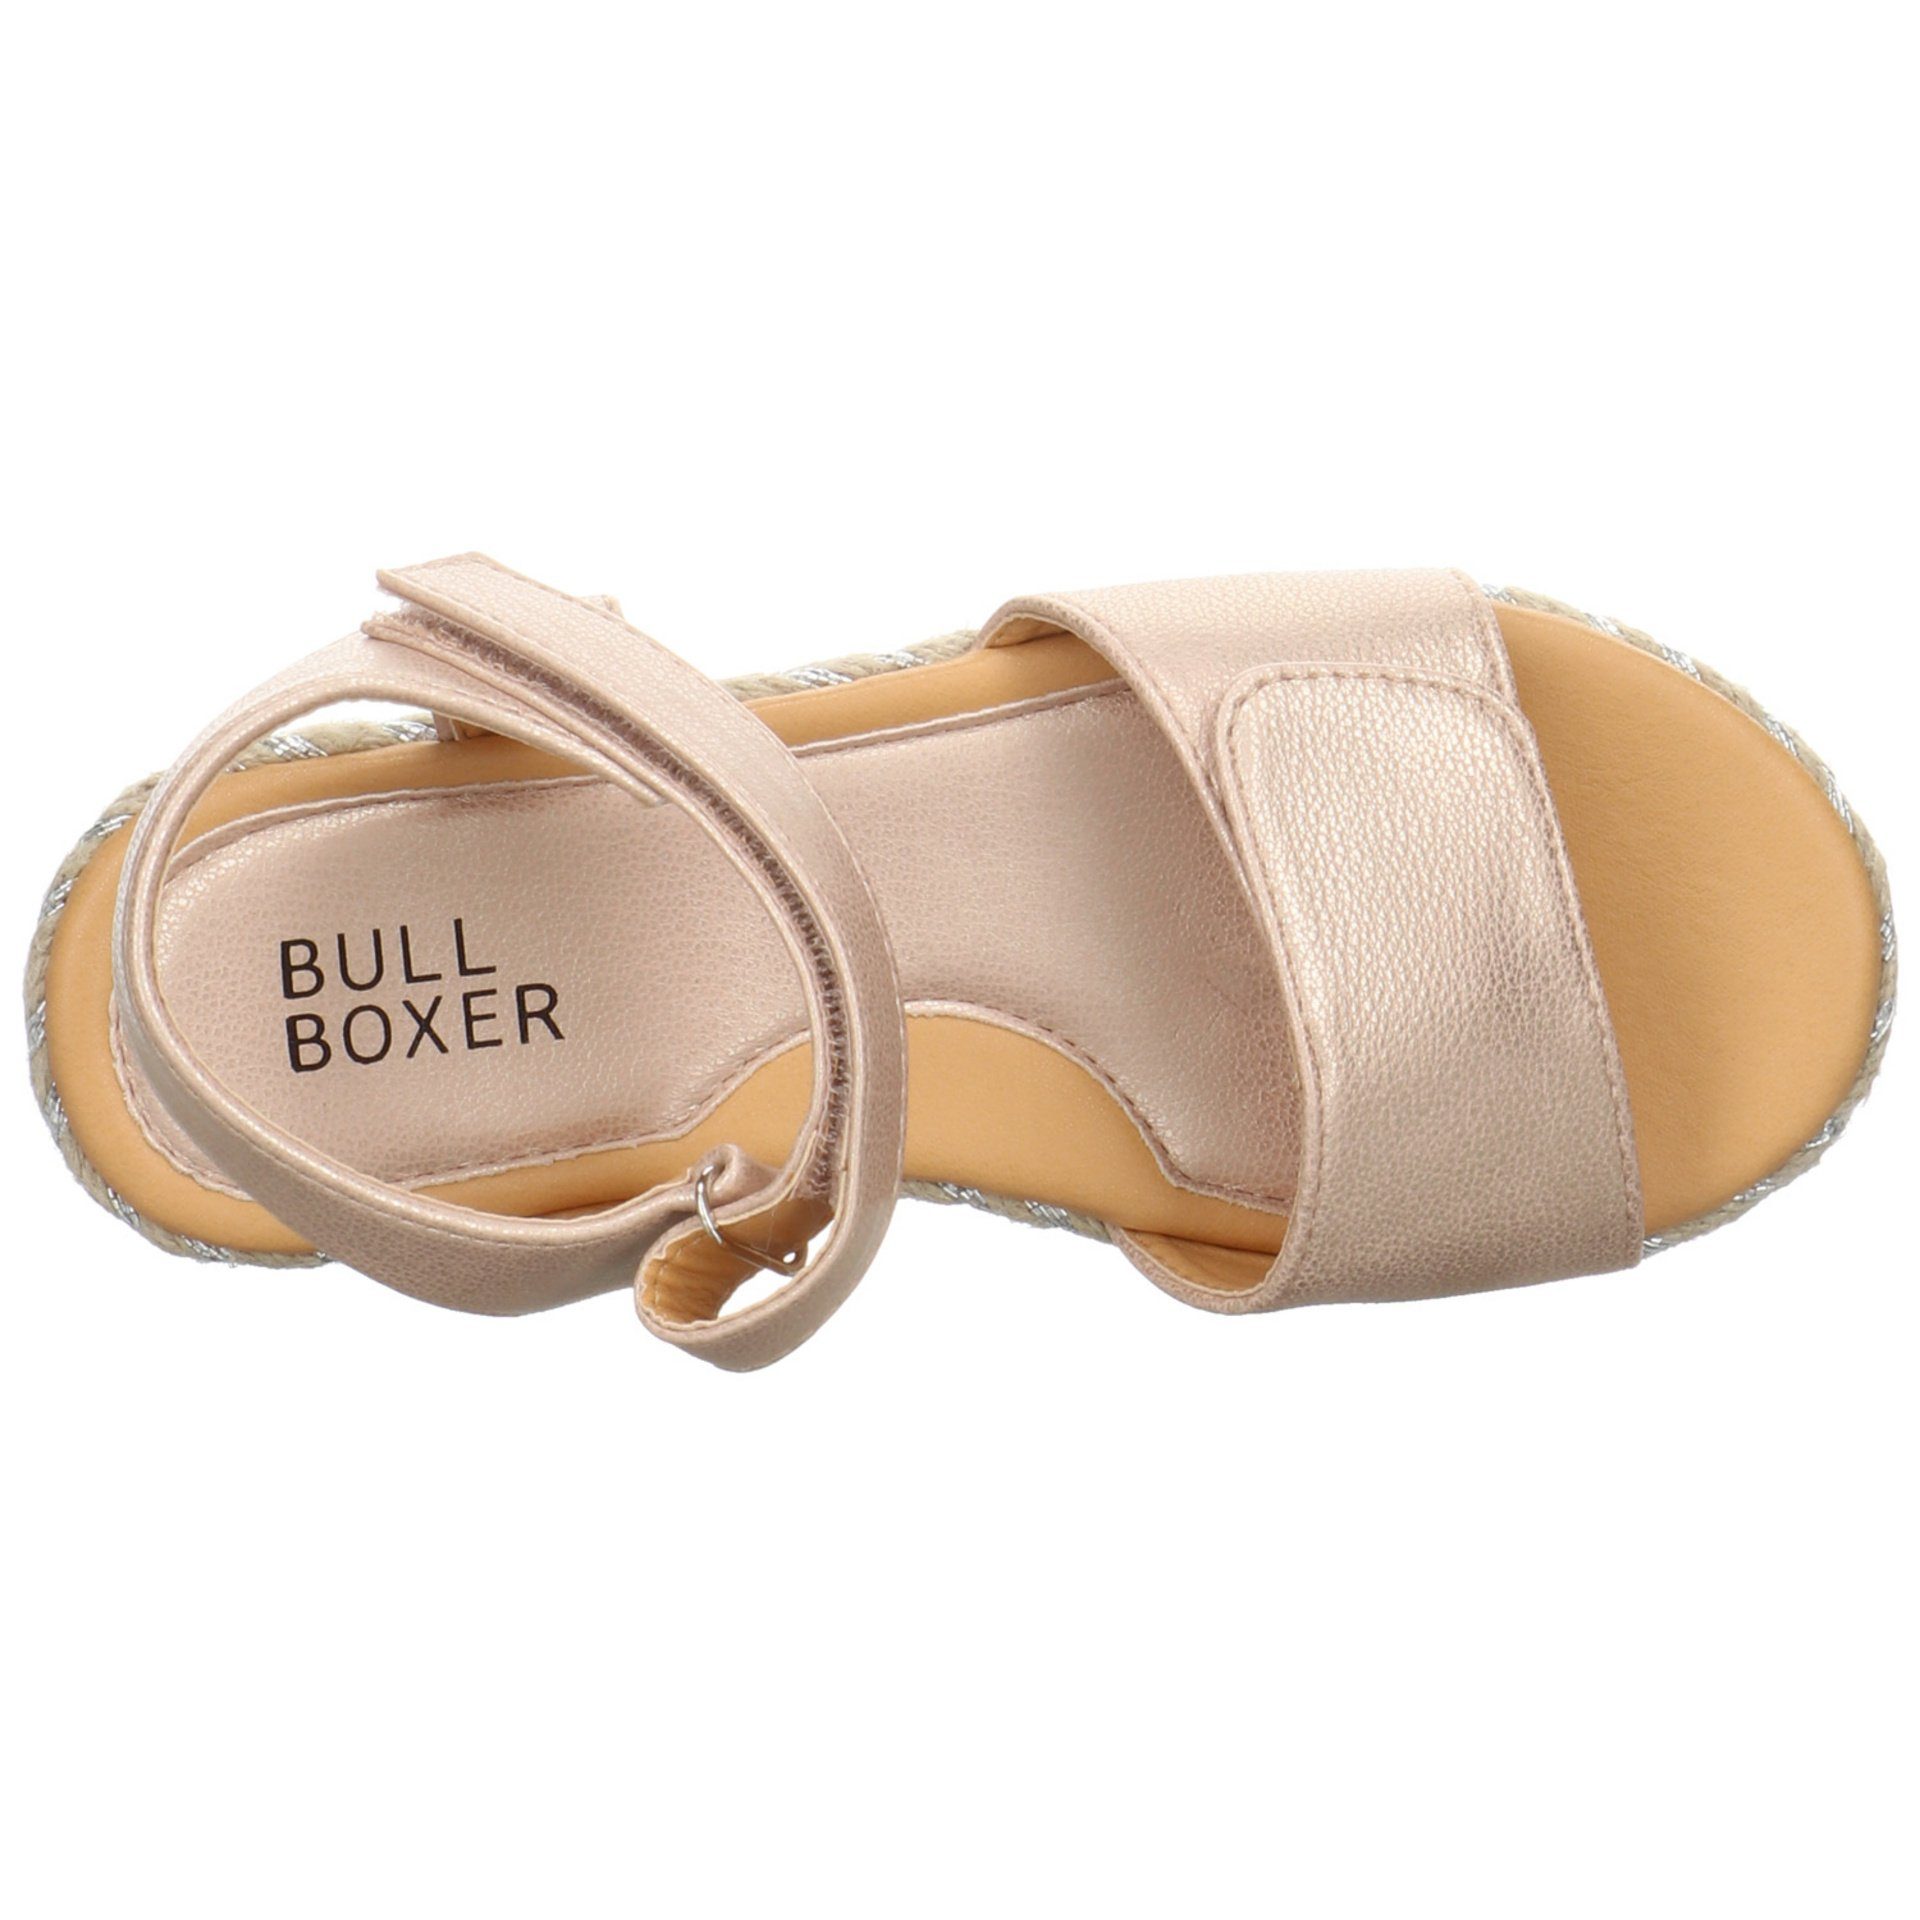 Bullboxer Sandale Mädchen Synthetik Sandalen Sandale Schuhe rot+lila Kinderschuhe Kombi sonst